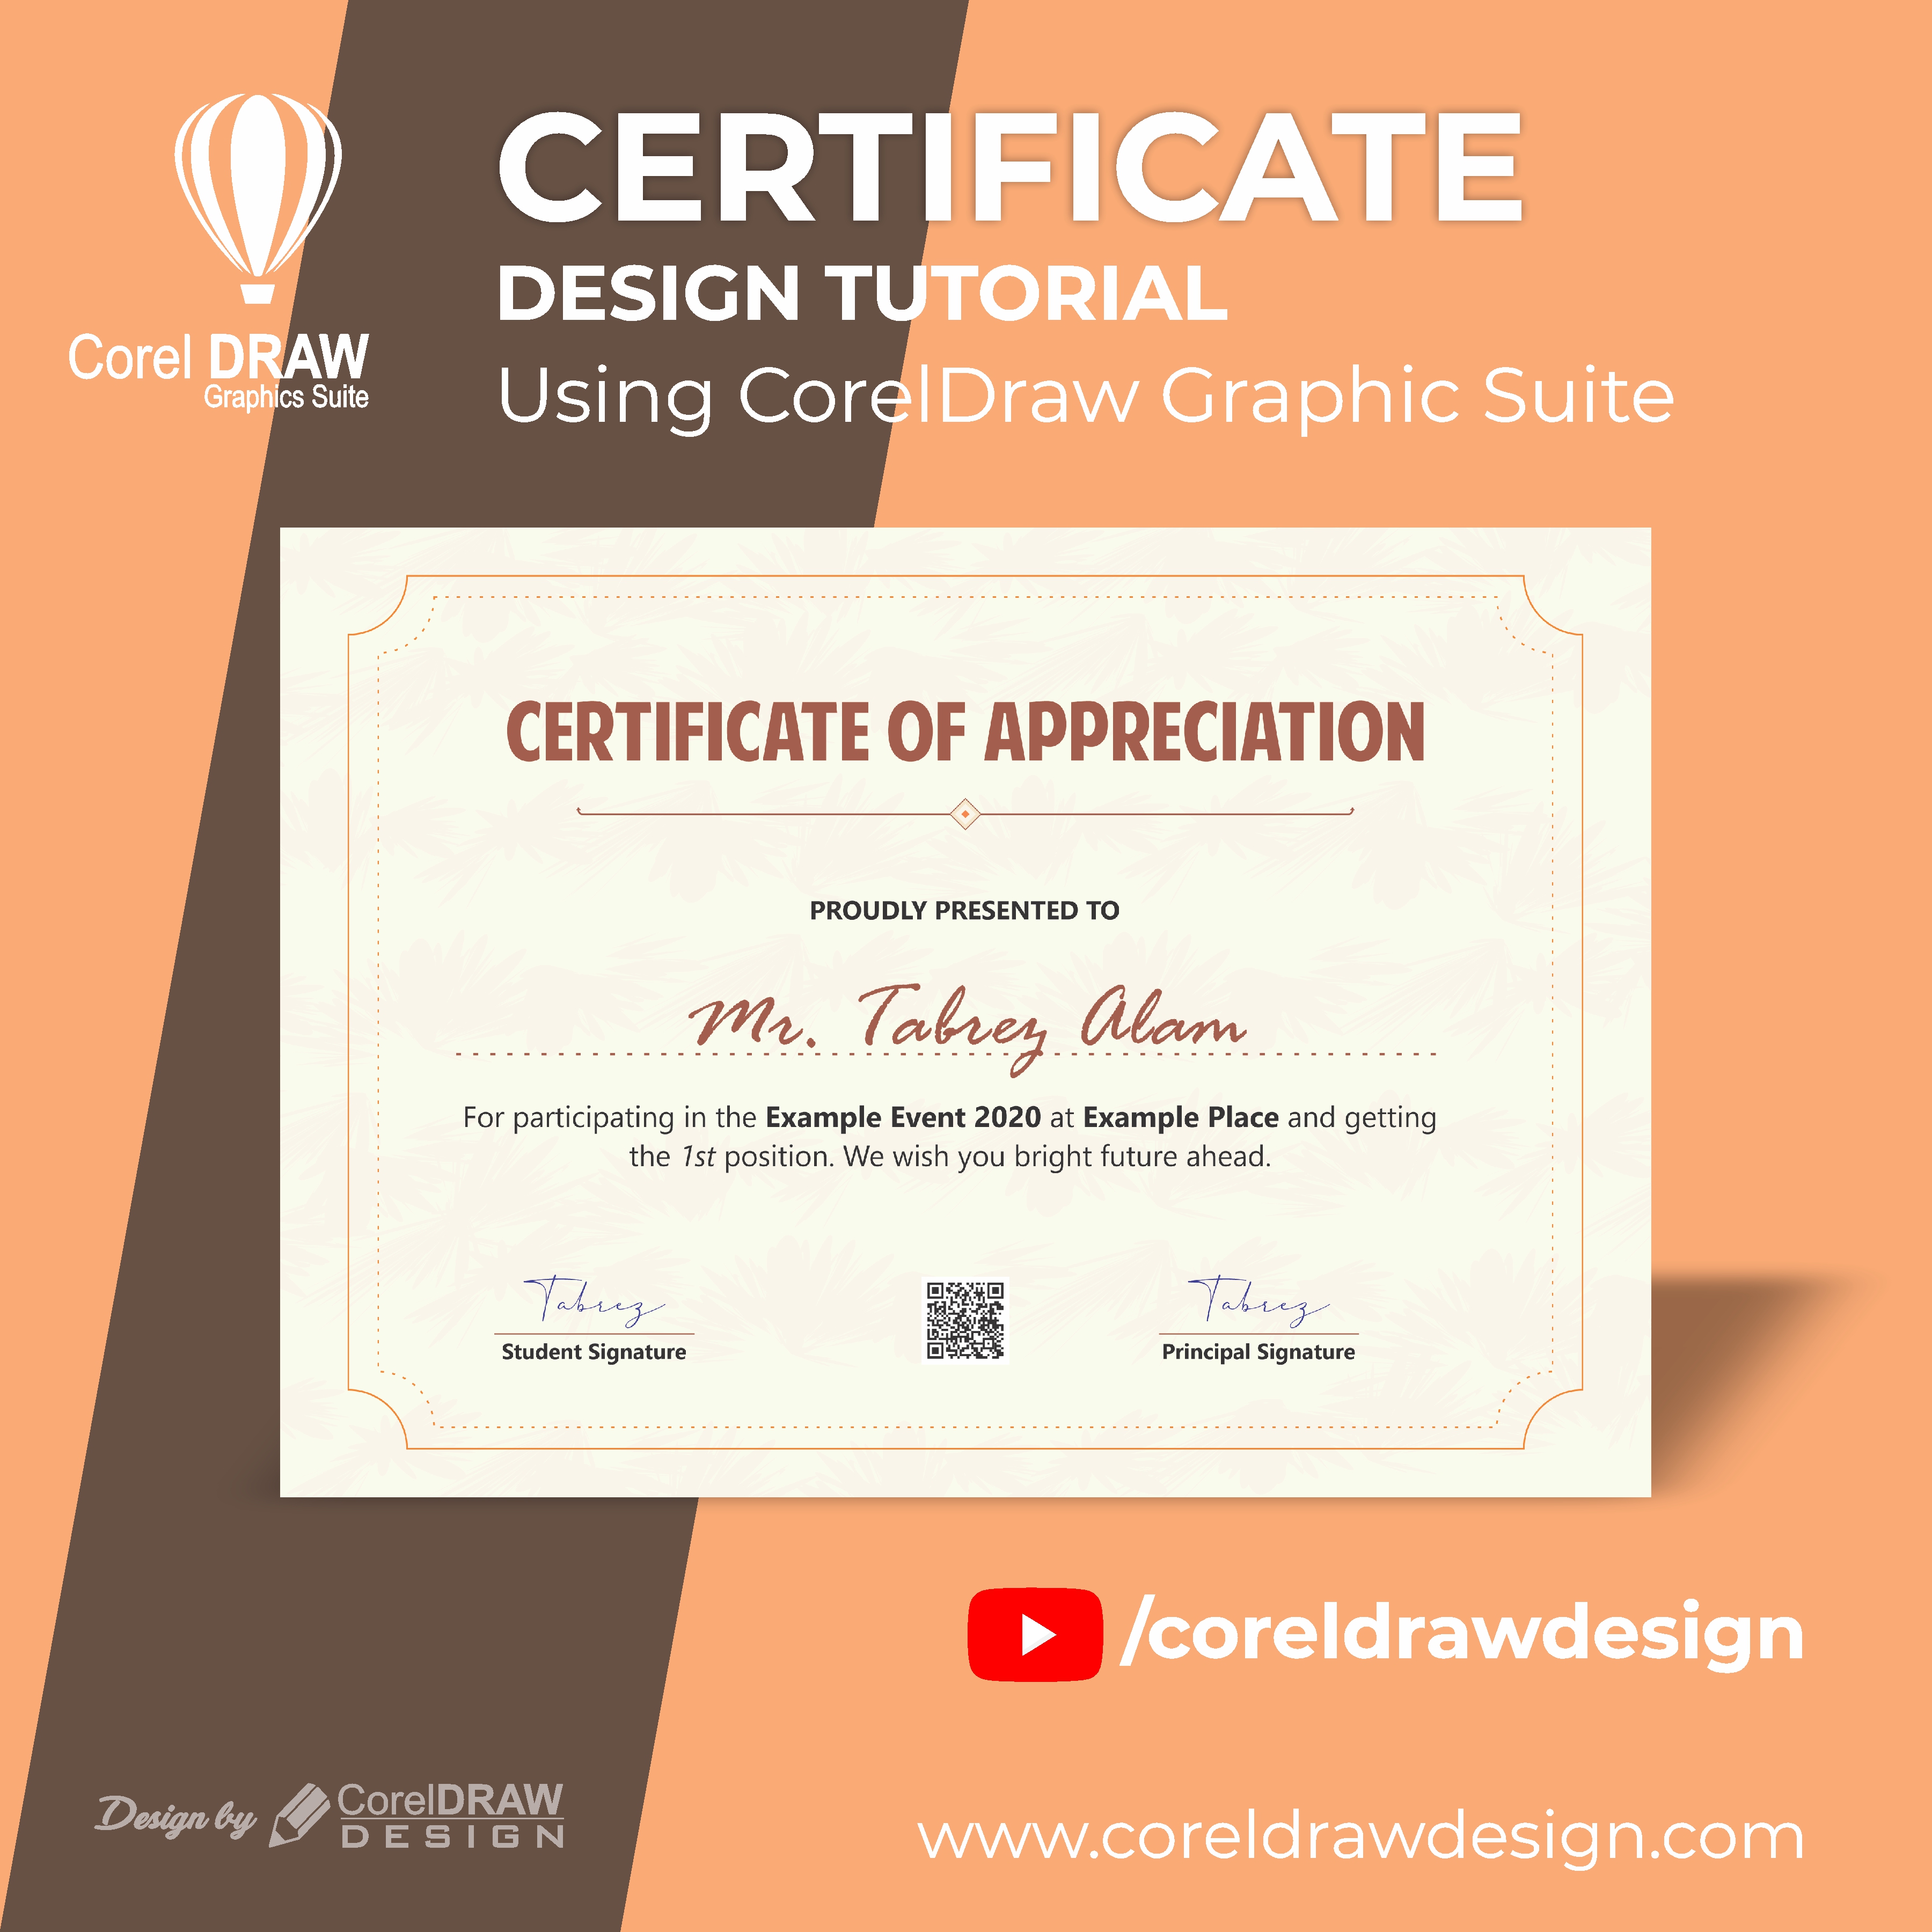 Creating   Certificate Tutorials   Digital Graphics   Tutorial   Coreldraw for Beginners